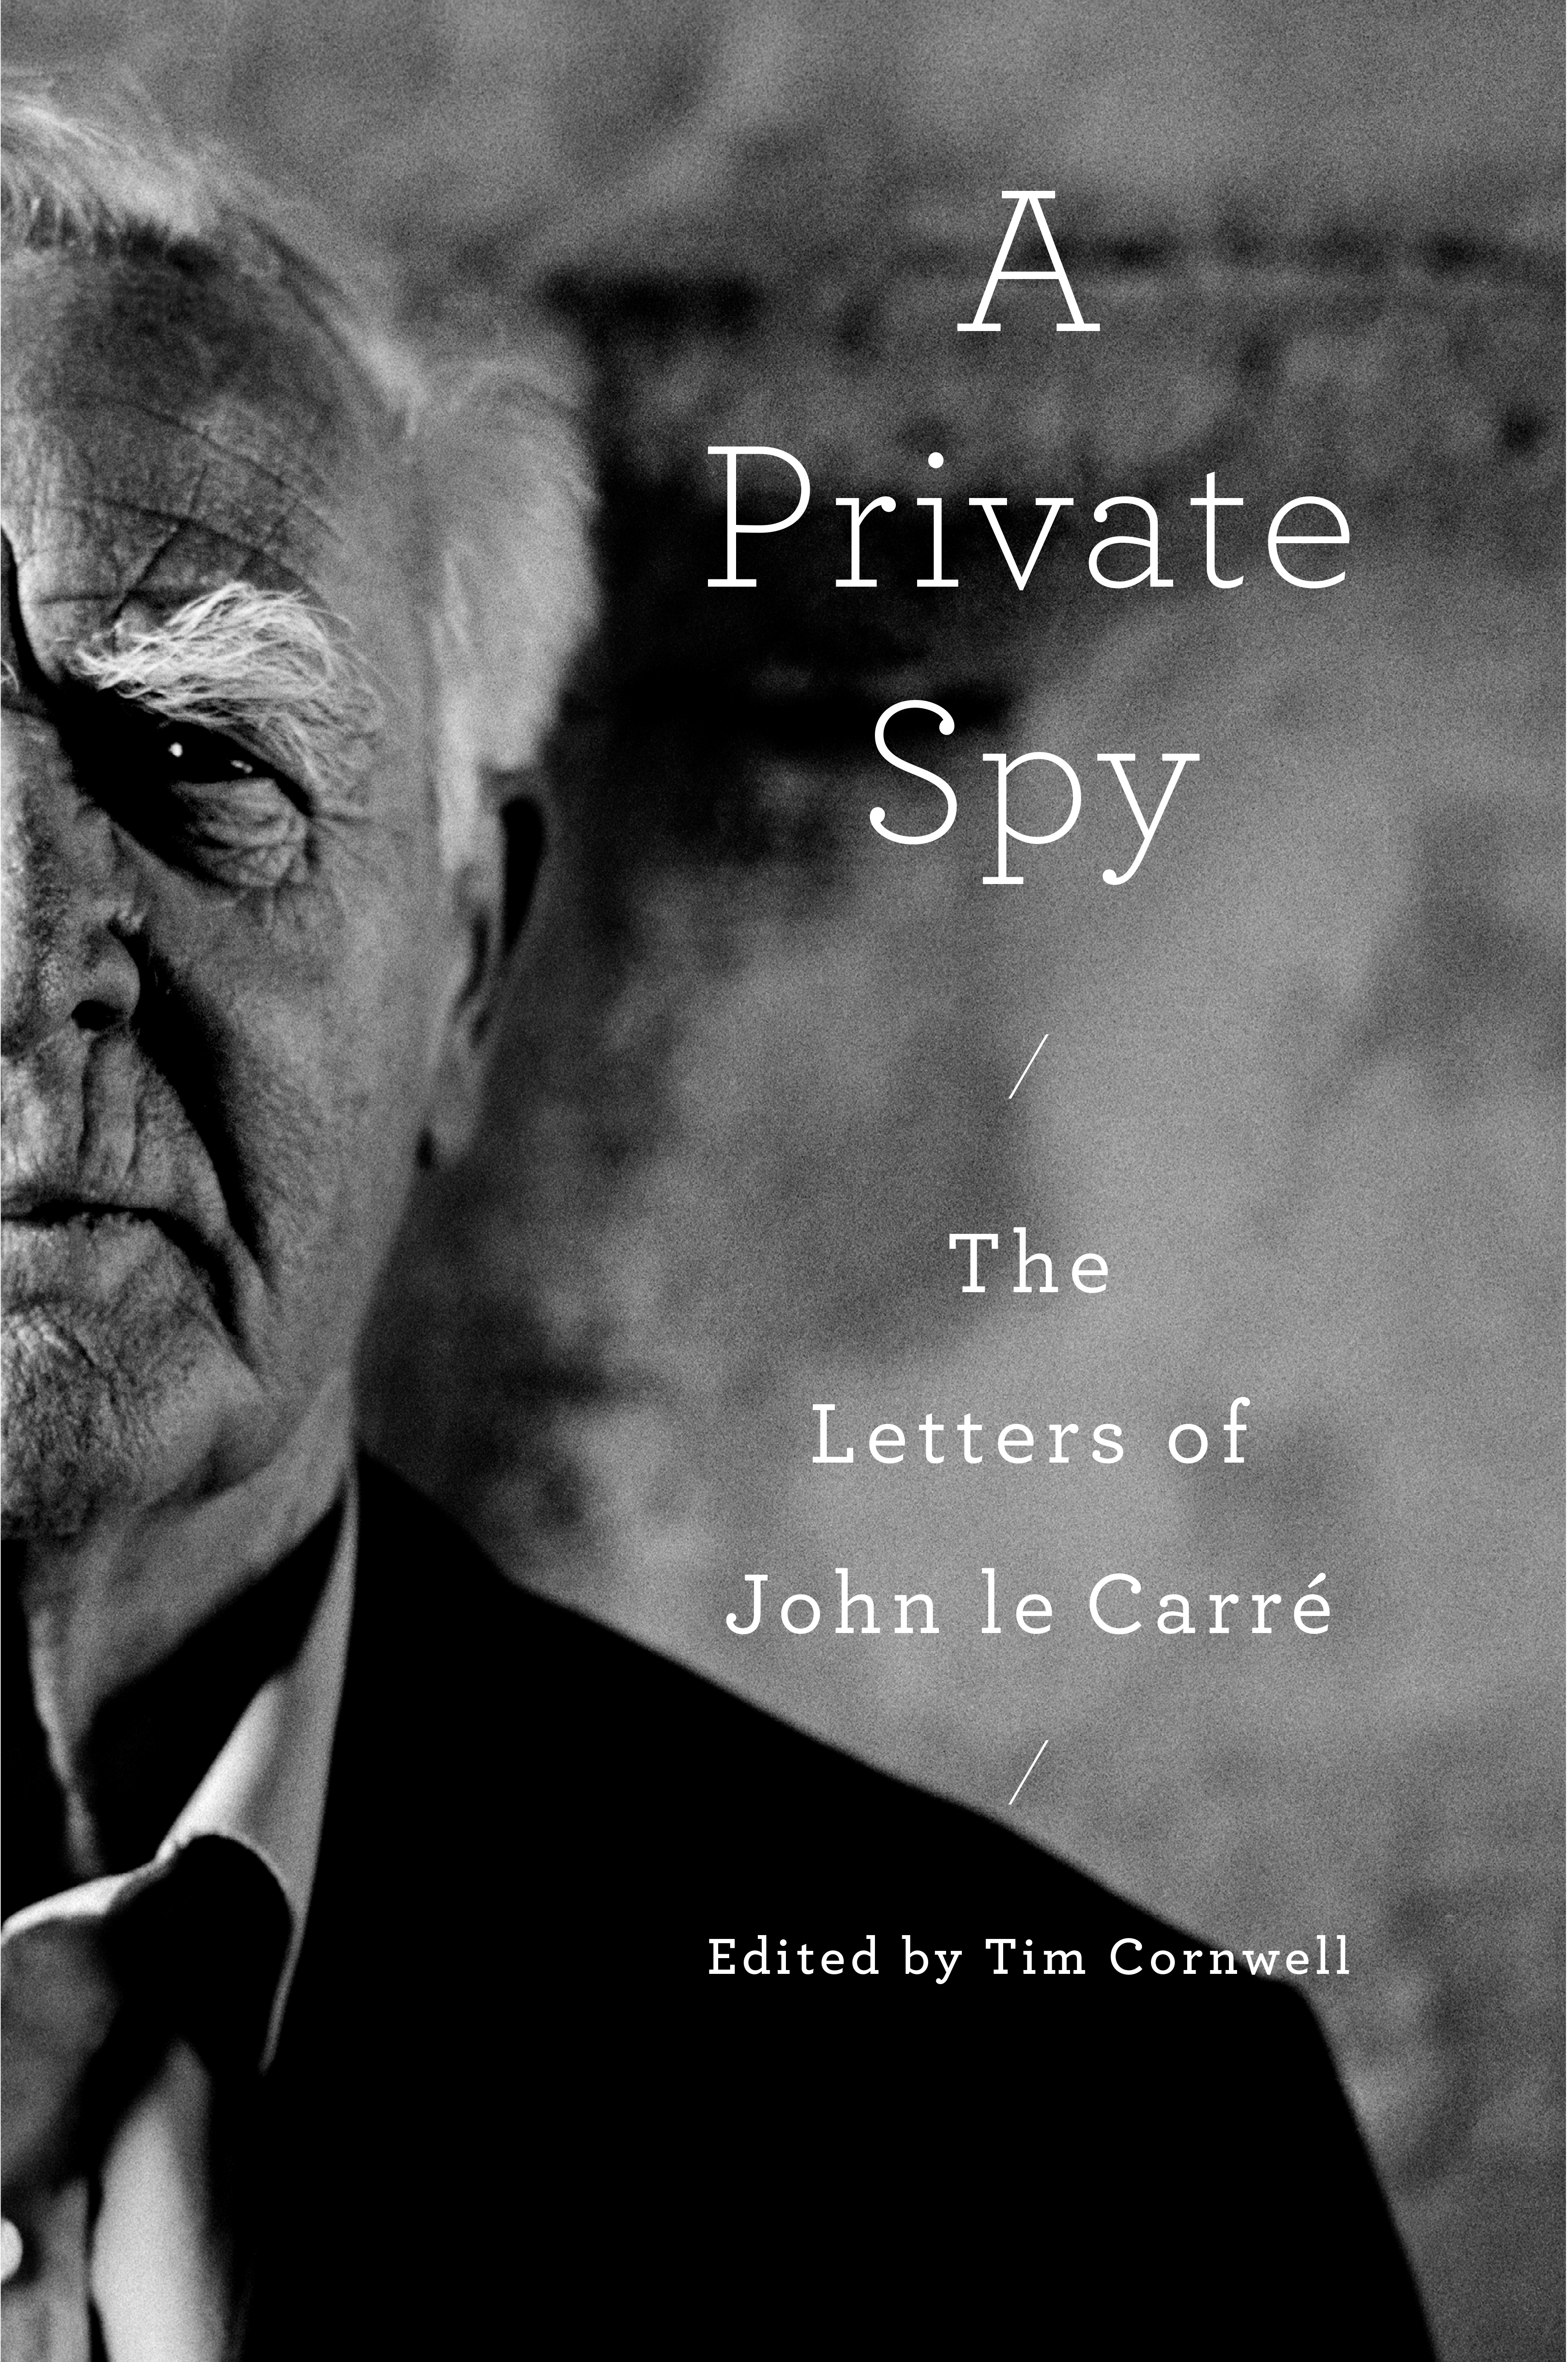 A Private Spy : The Letters of John le Carré | Biography & Memoir